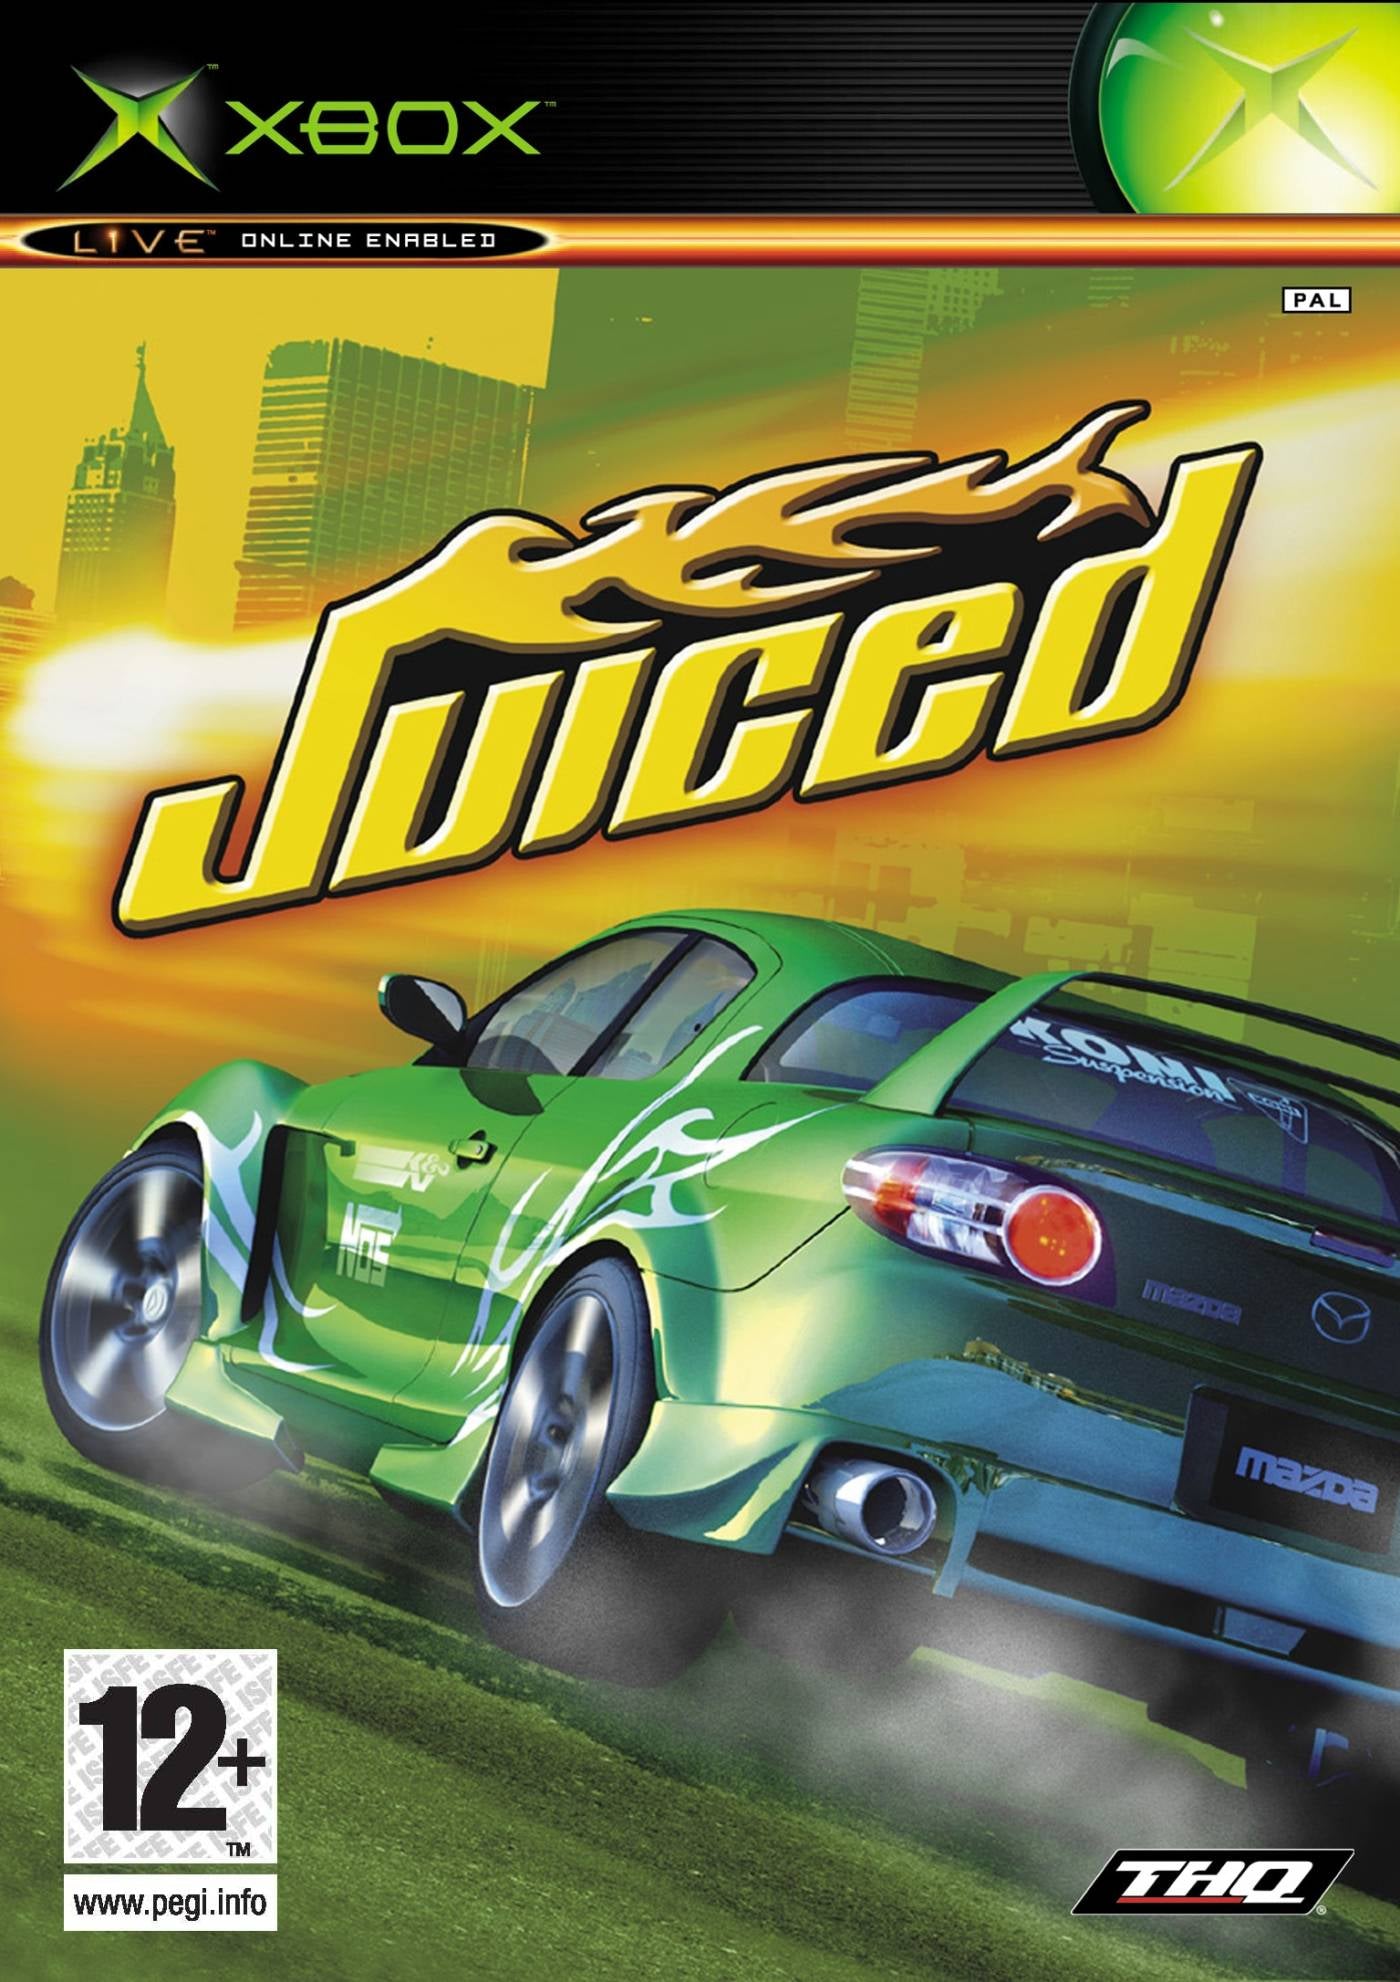 Game | Microsoft XBOX | Juiced